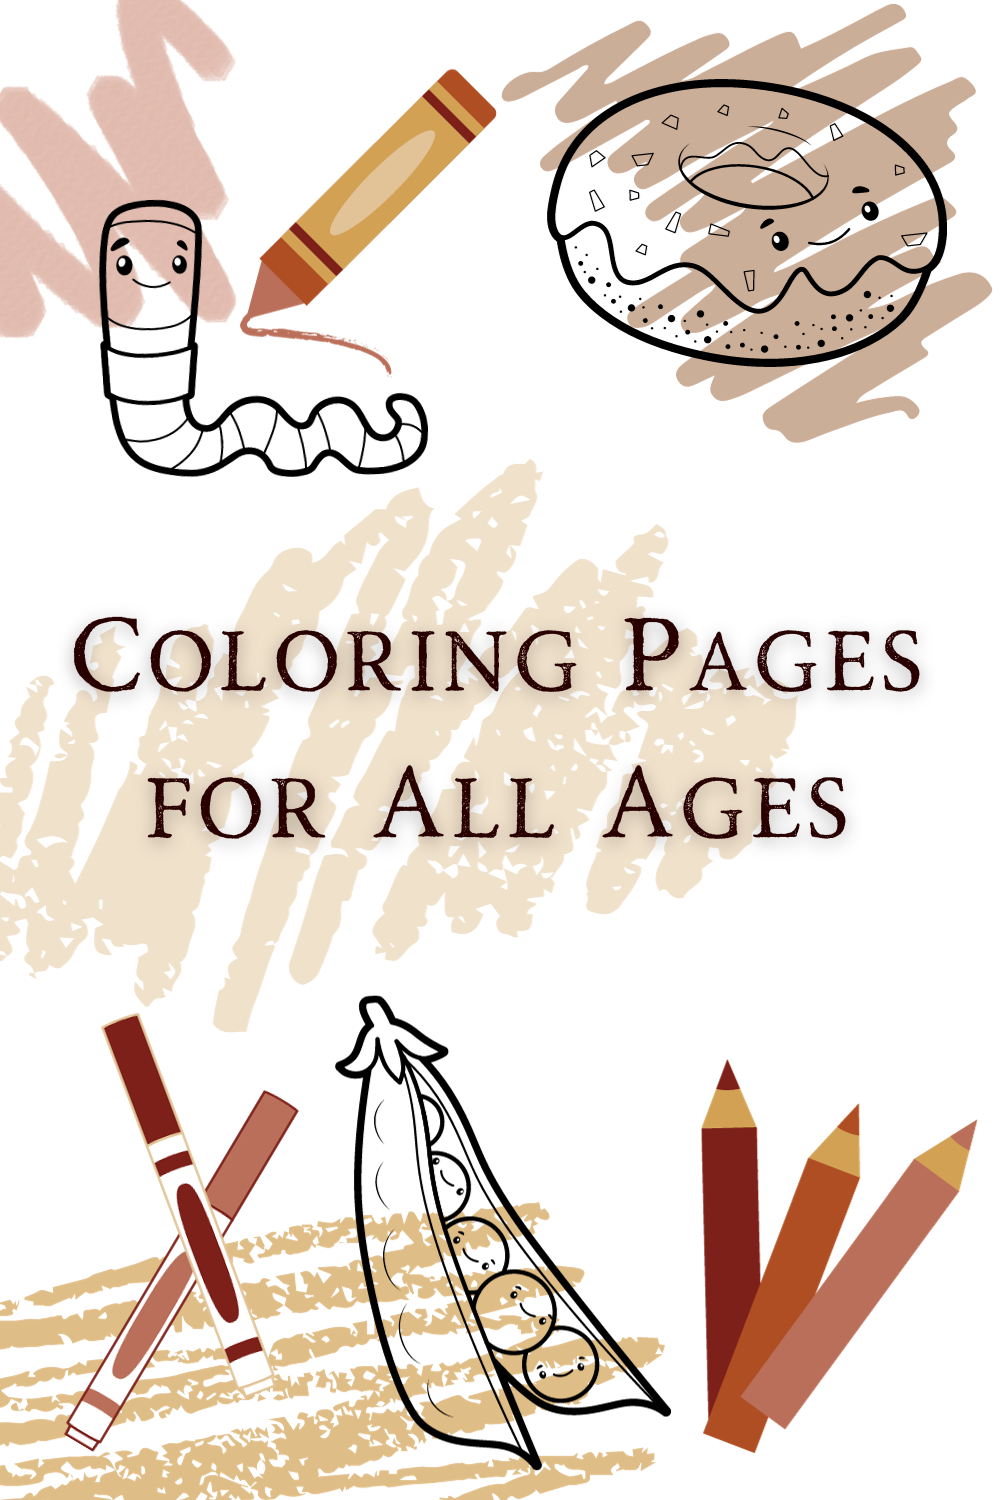 Color Chart For Yoobi Gel Pens (12 Pack) - The Coloring Inn